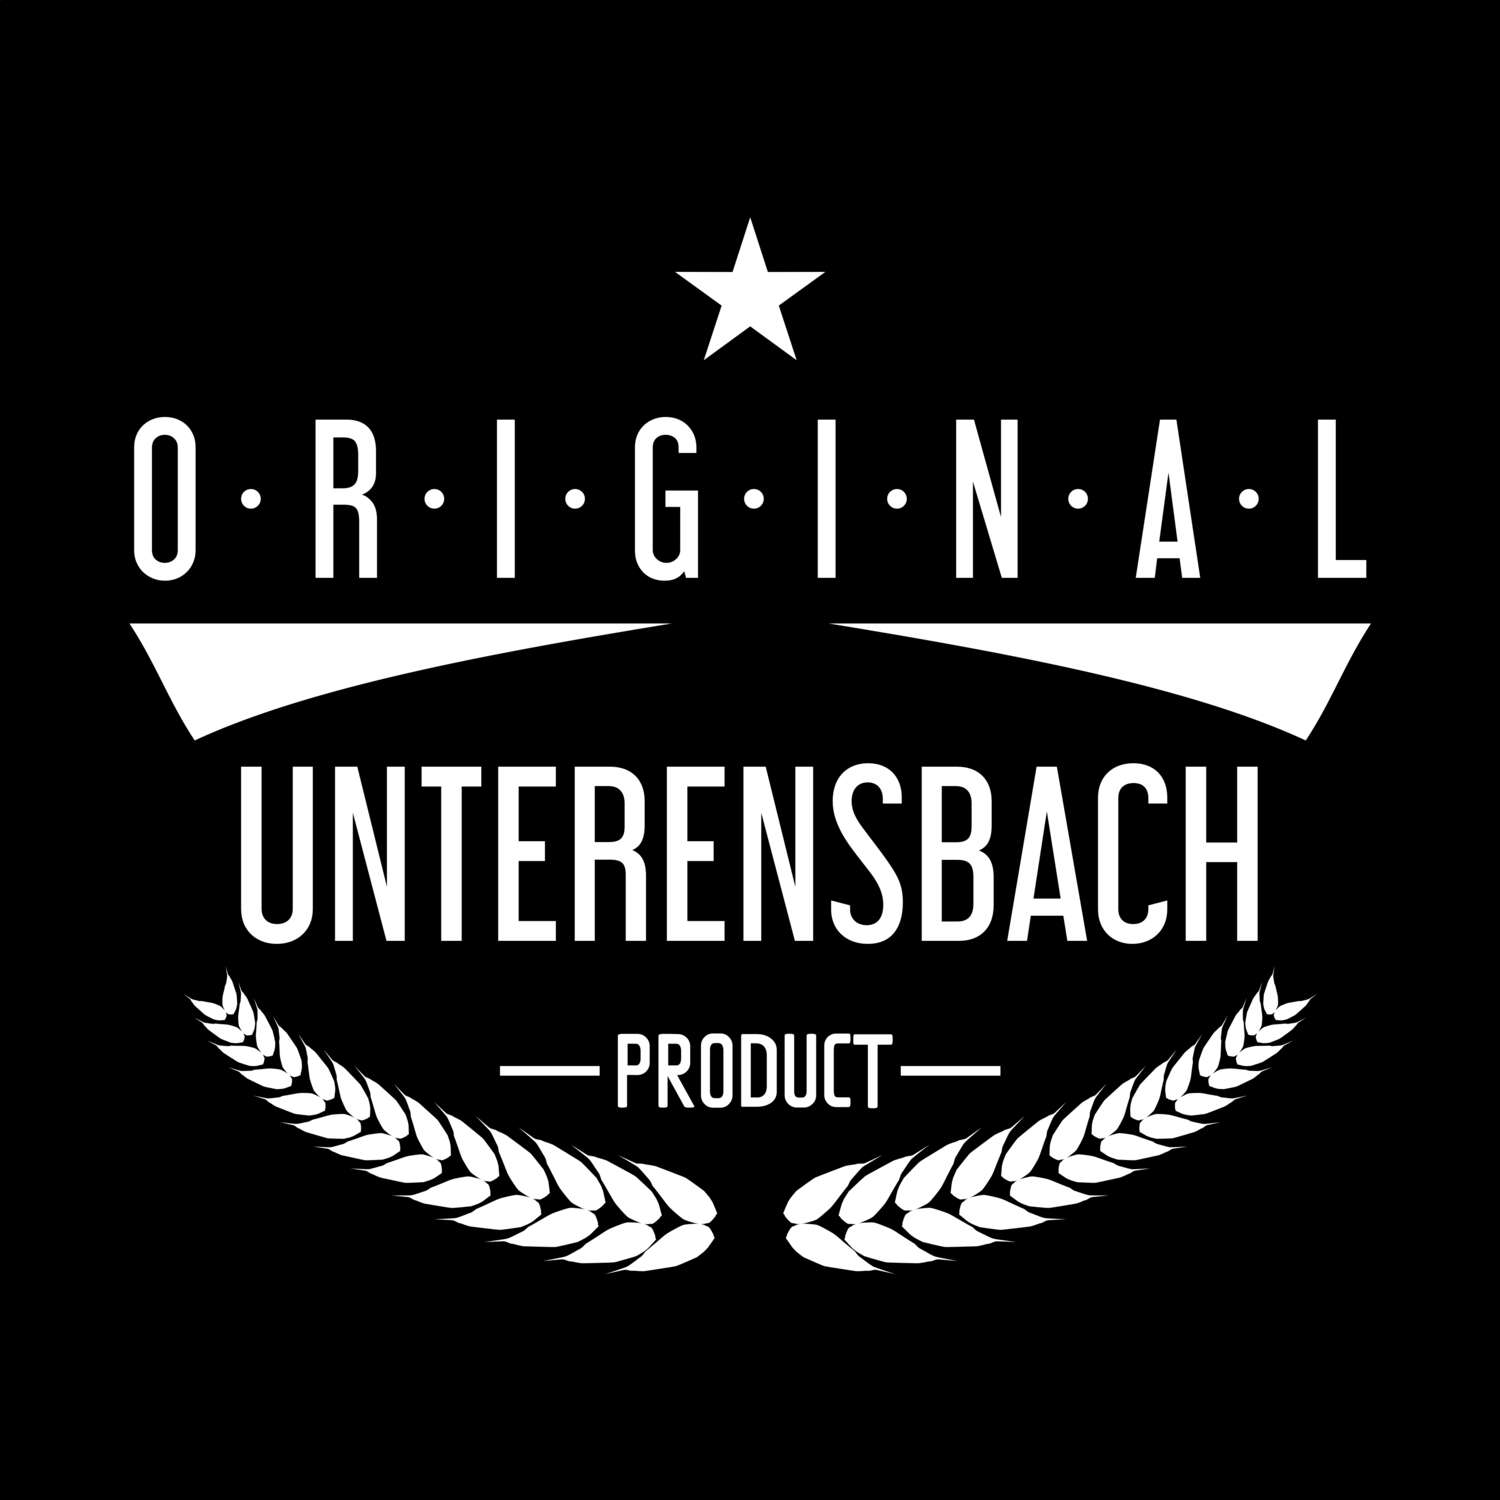 Unterensbach T-Shirt »Original Product«